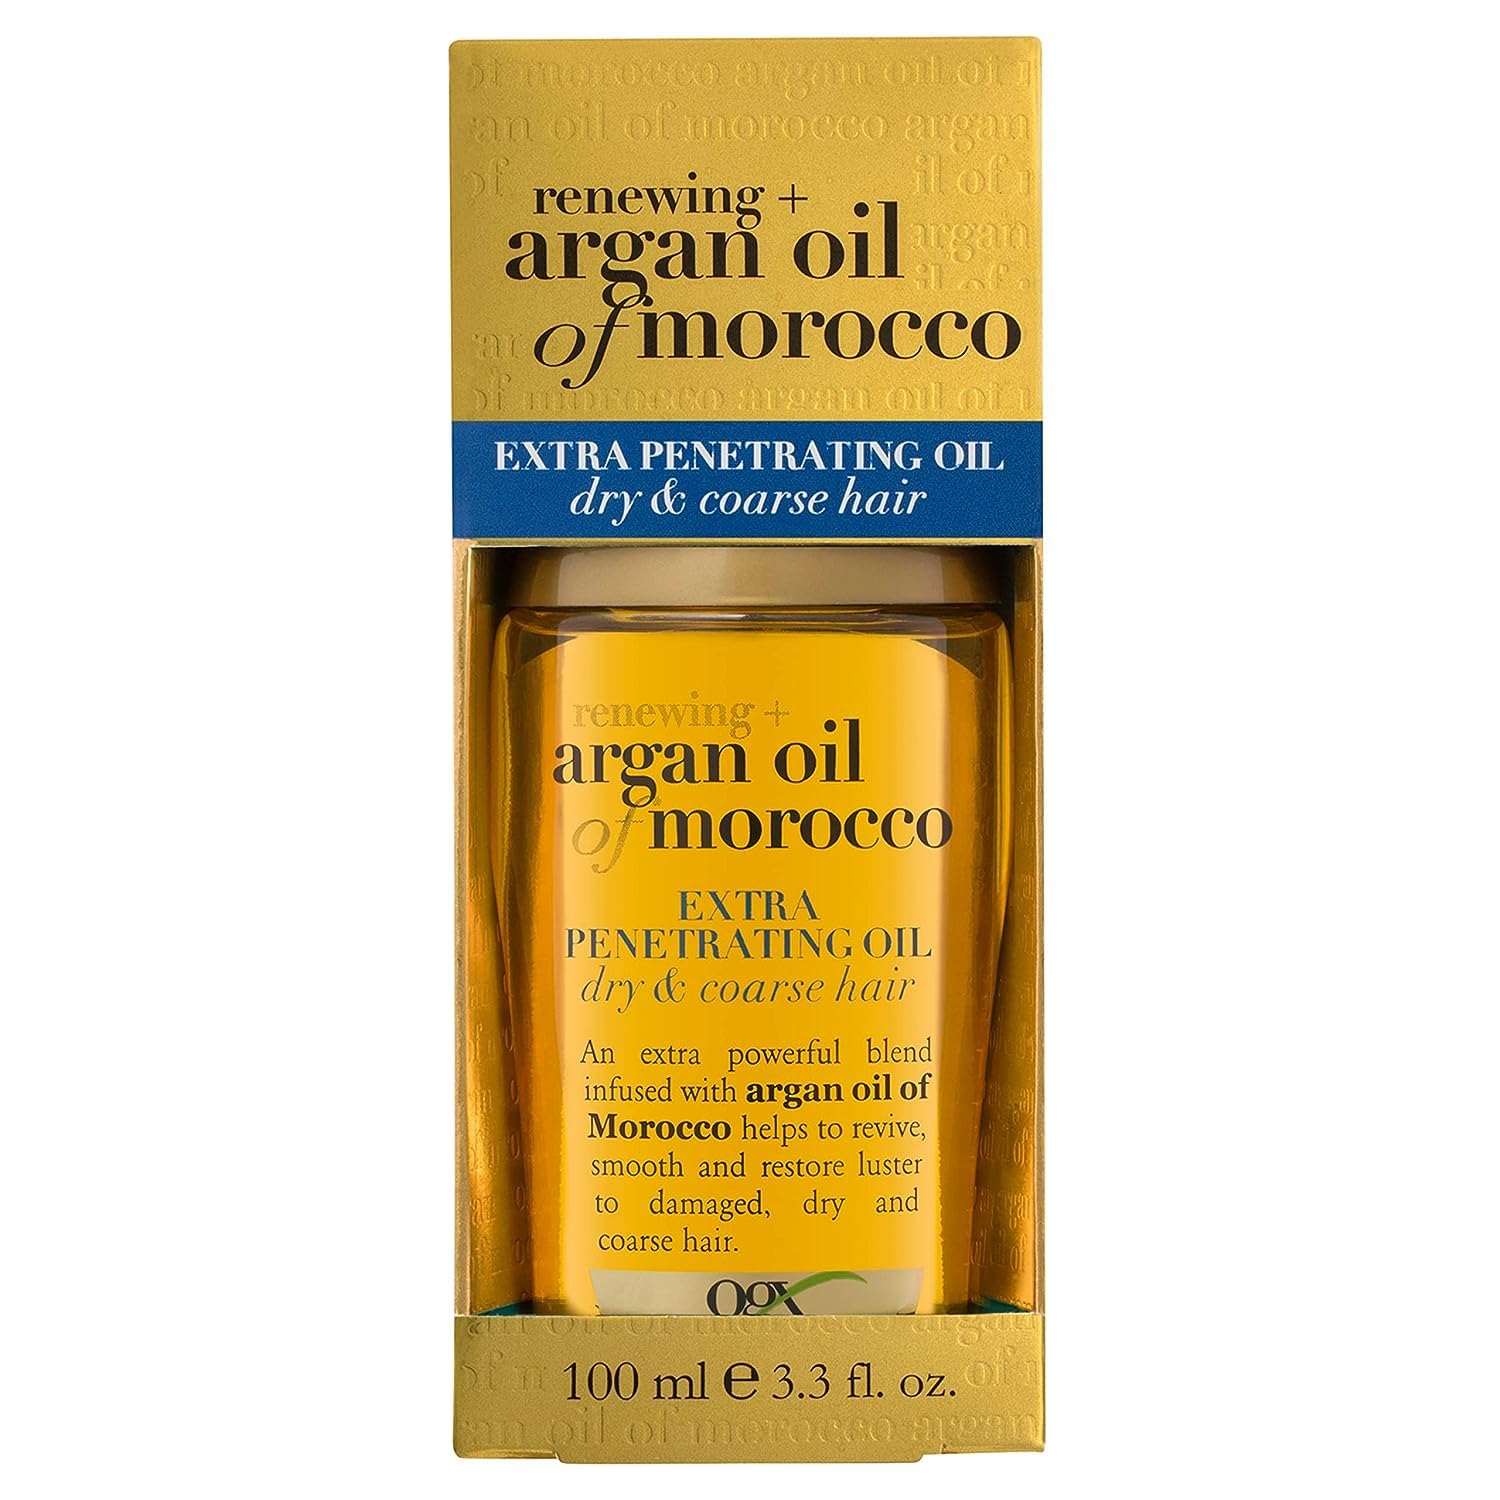 Ogx Argan Oil of Morocco Penetrating Oil Reviews